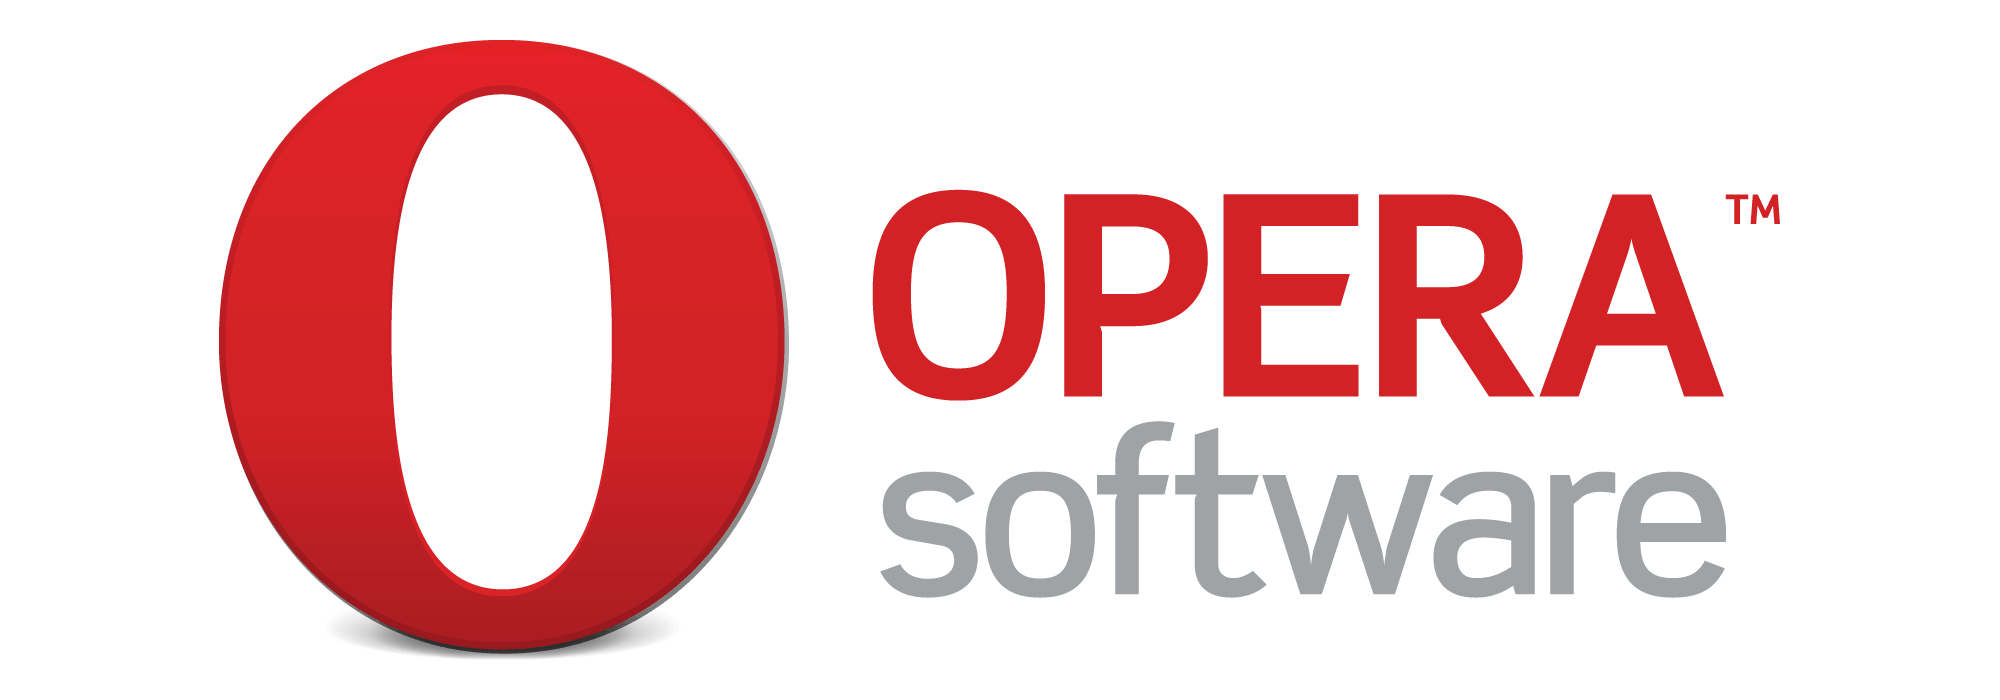 Opera Logo - Image - Opera-logo.png | Logopedia | FANDOM powered by Wikia